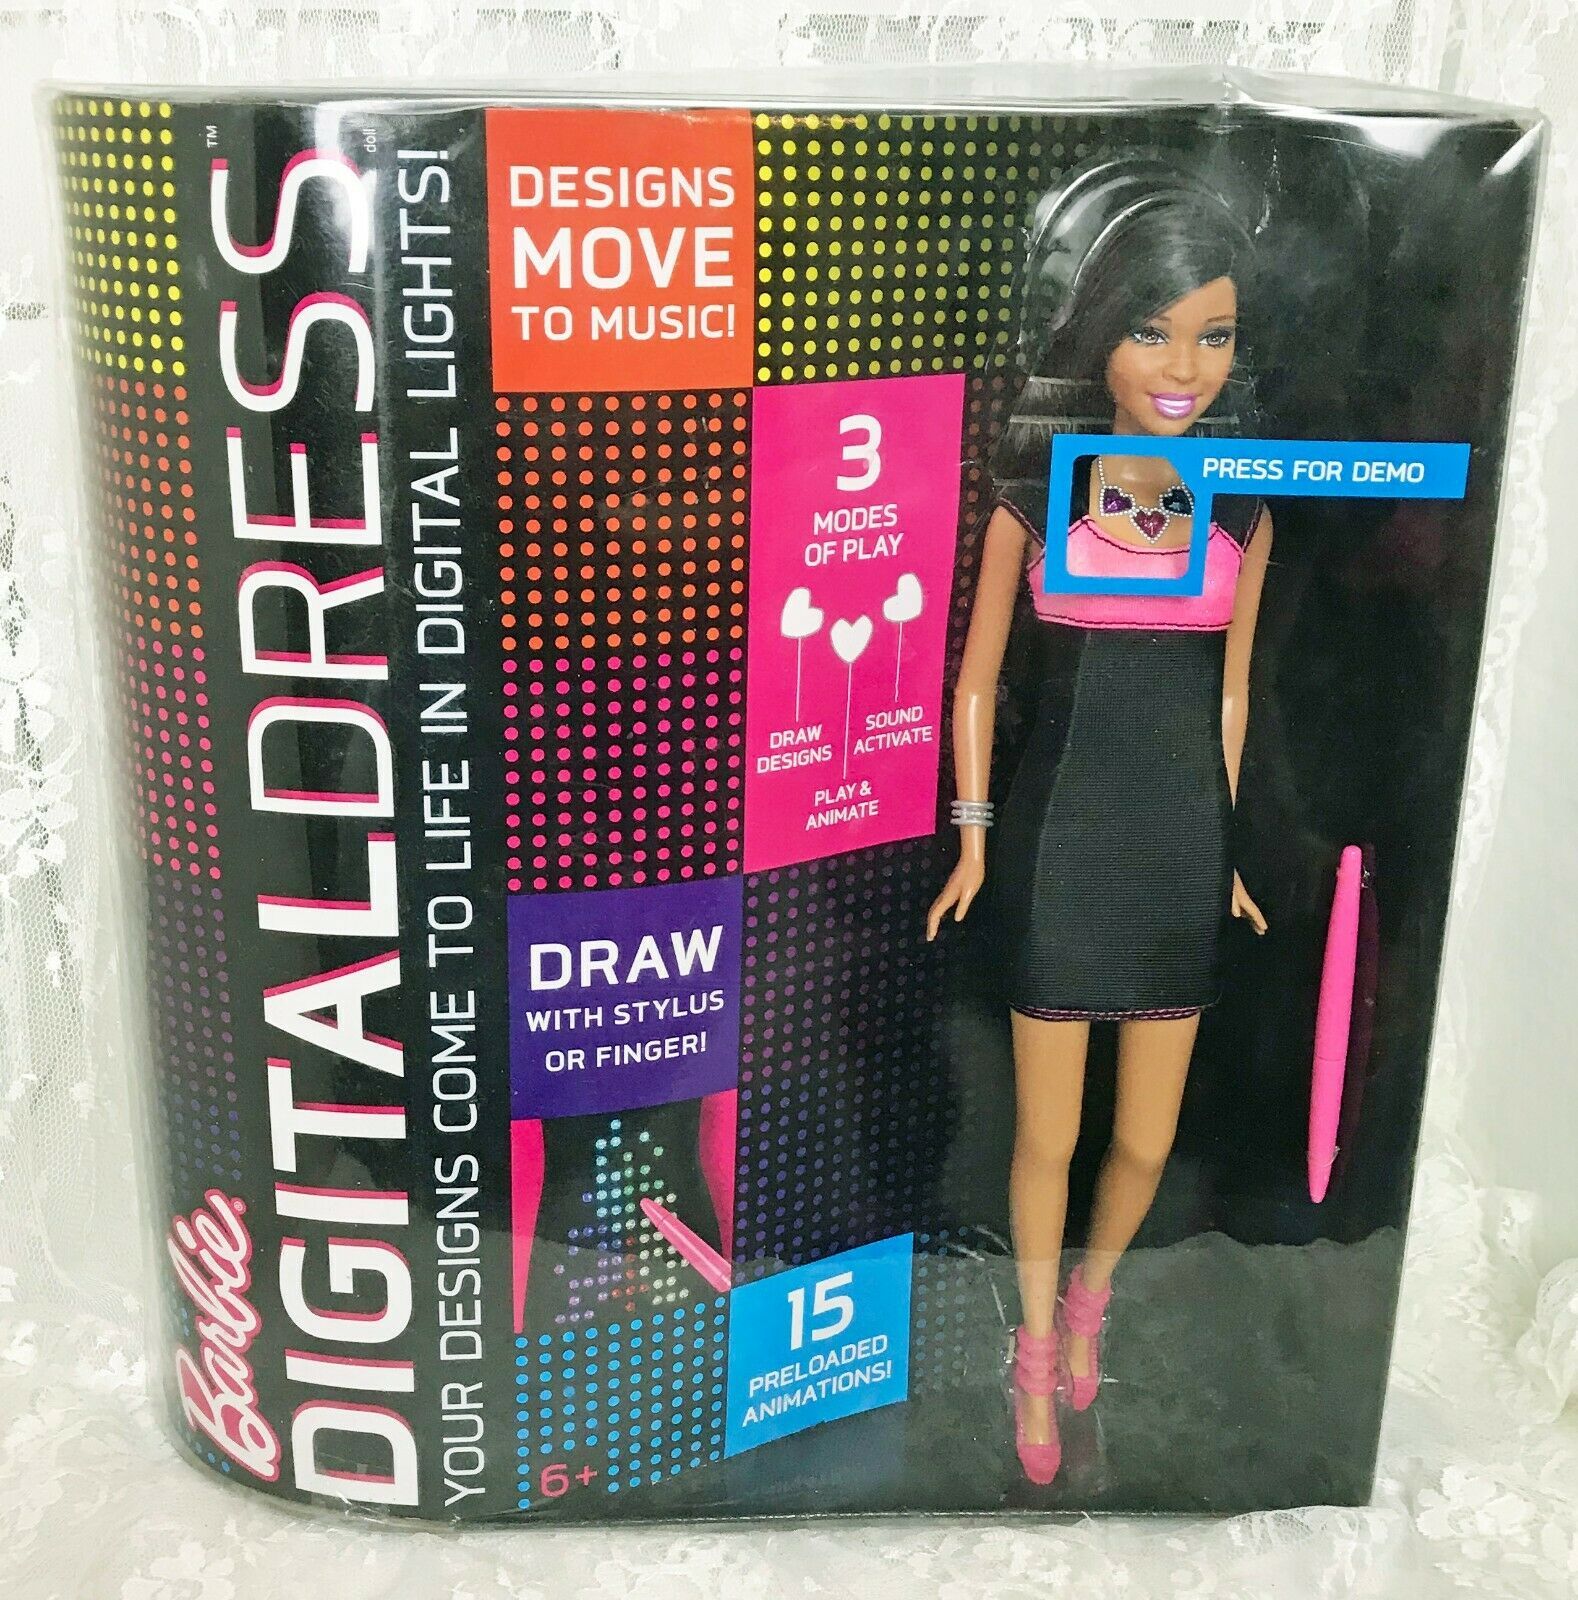 barbie digital dress